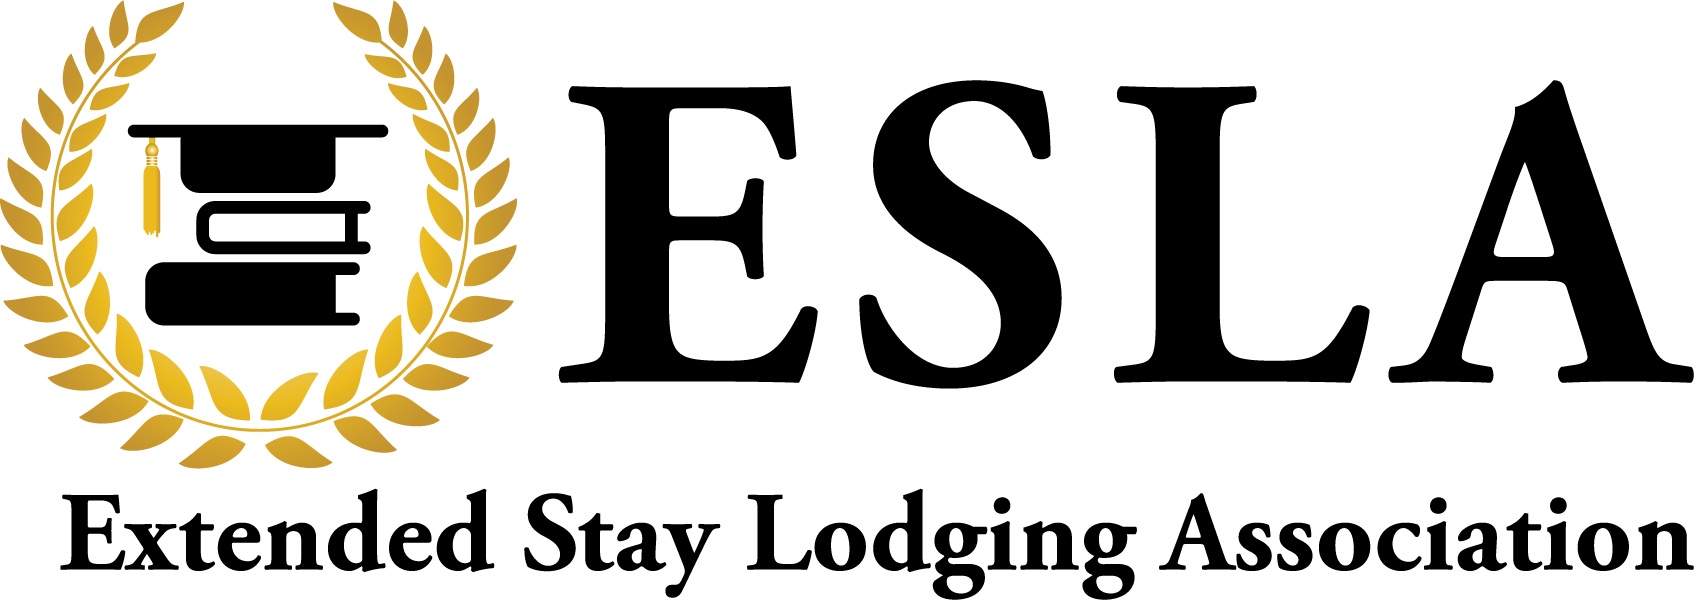 Extended Stay Lodging Association (ESLA)